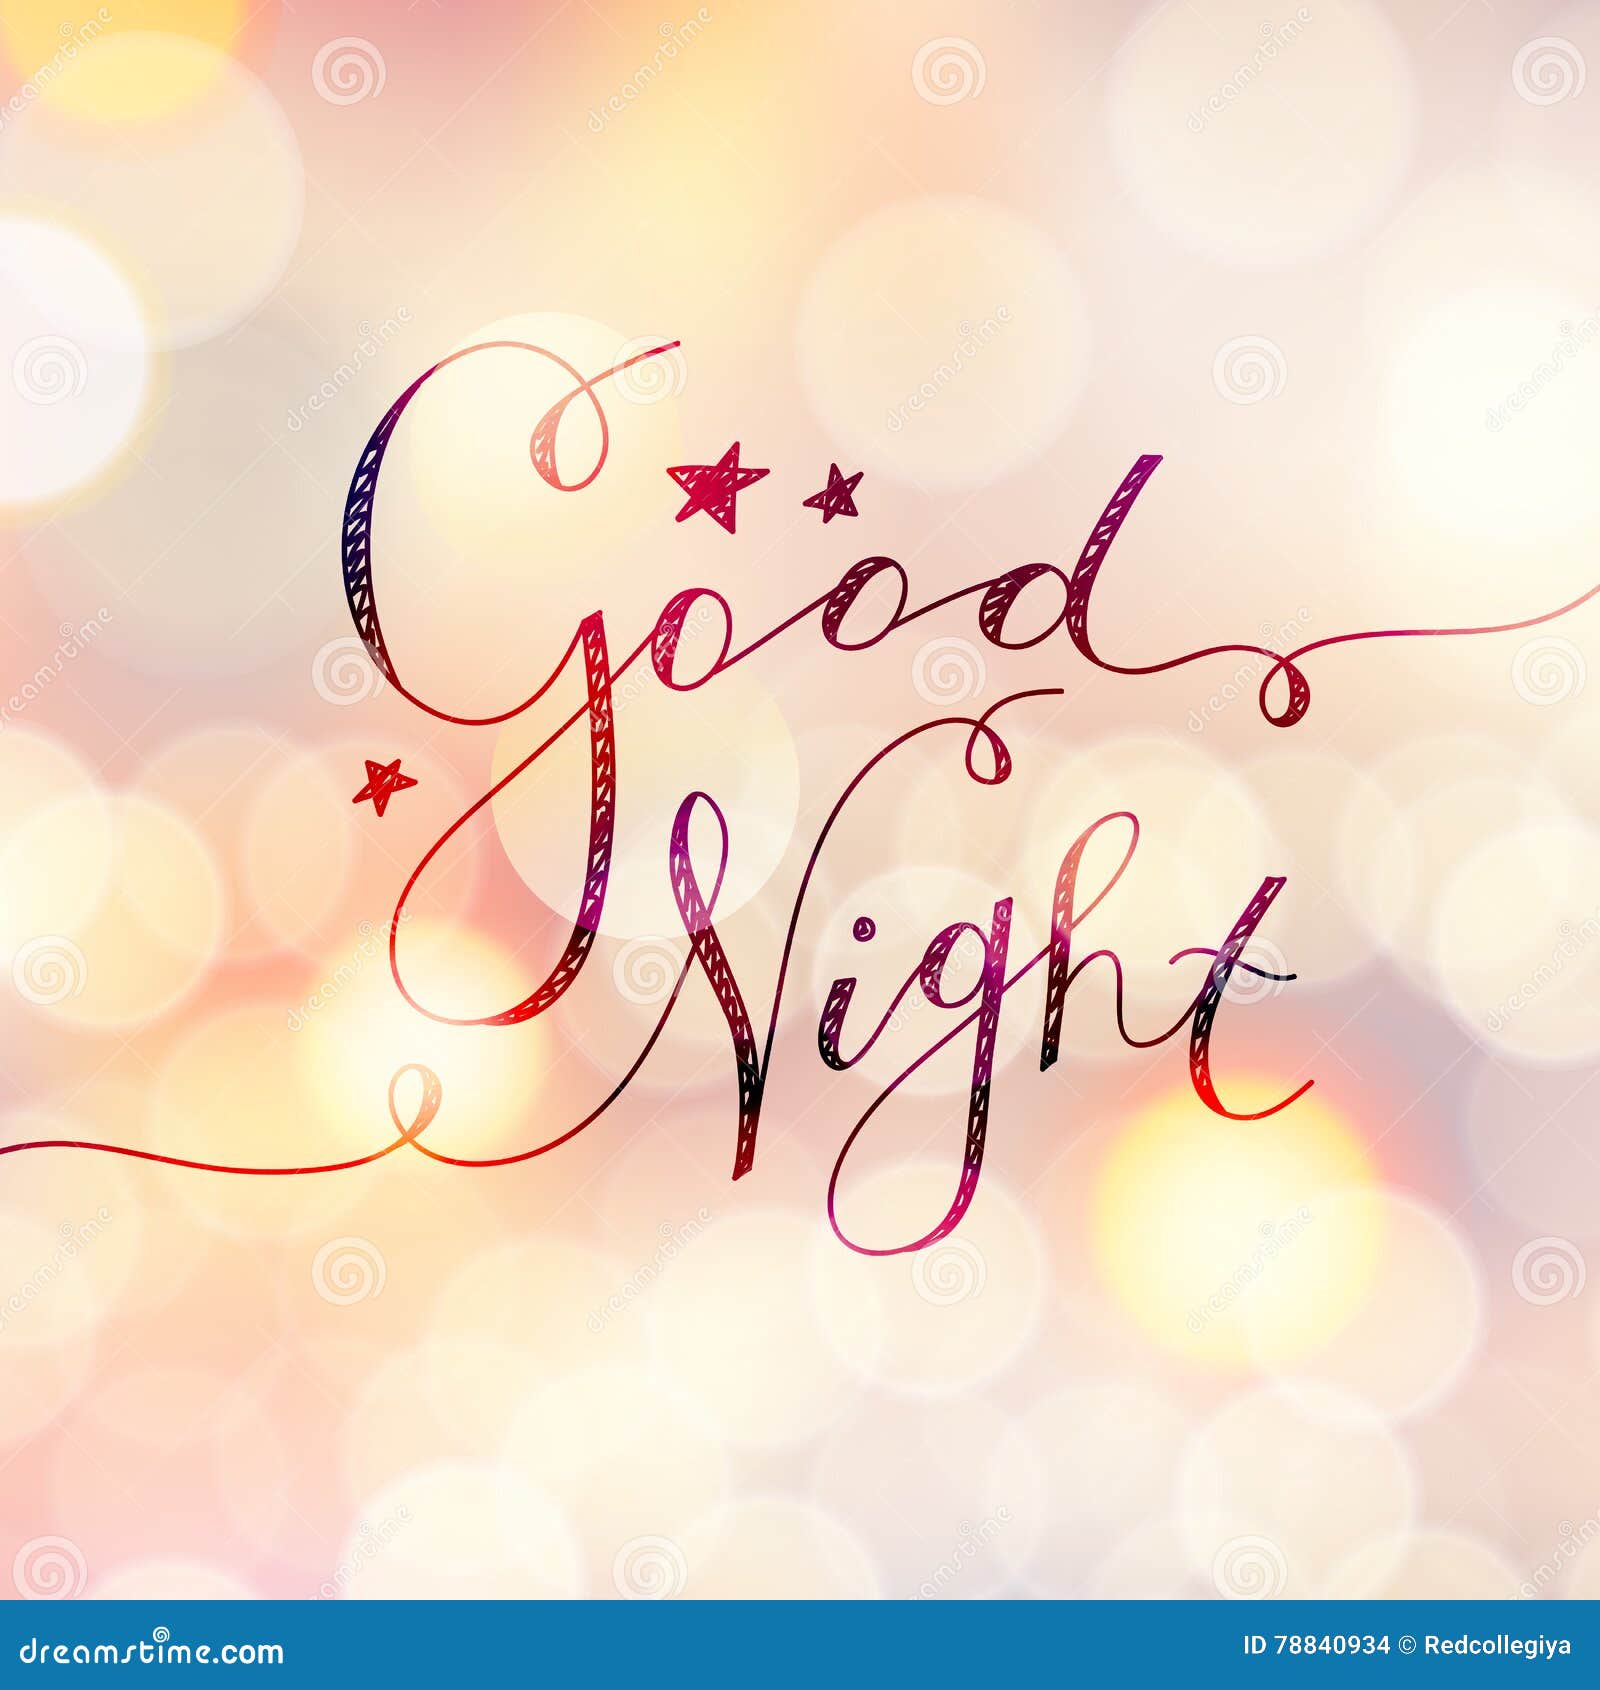 Good night lettering stock vector. Illustration of shine - 78840934